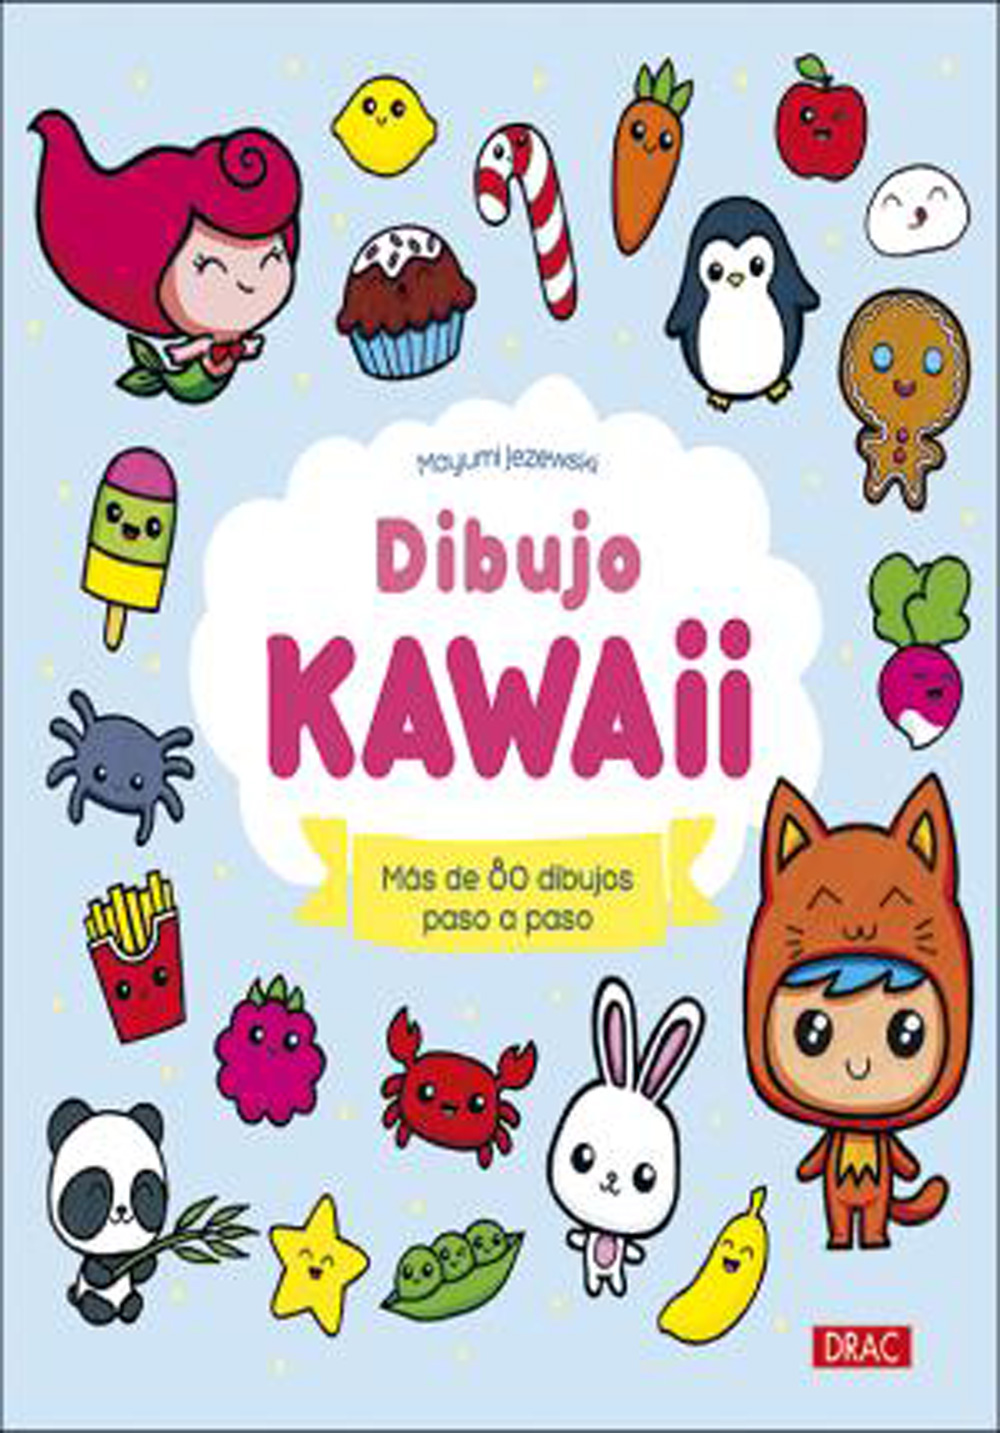 10 ideas de Fotos para perfil whatsapp  imagenes de animales kawaii,  imagenes de parejas anime, dibujos kawaii de animales